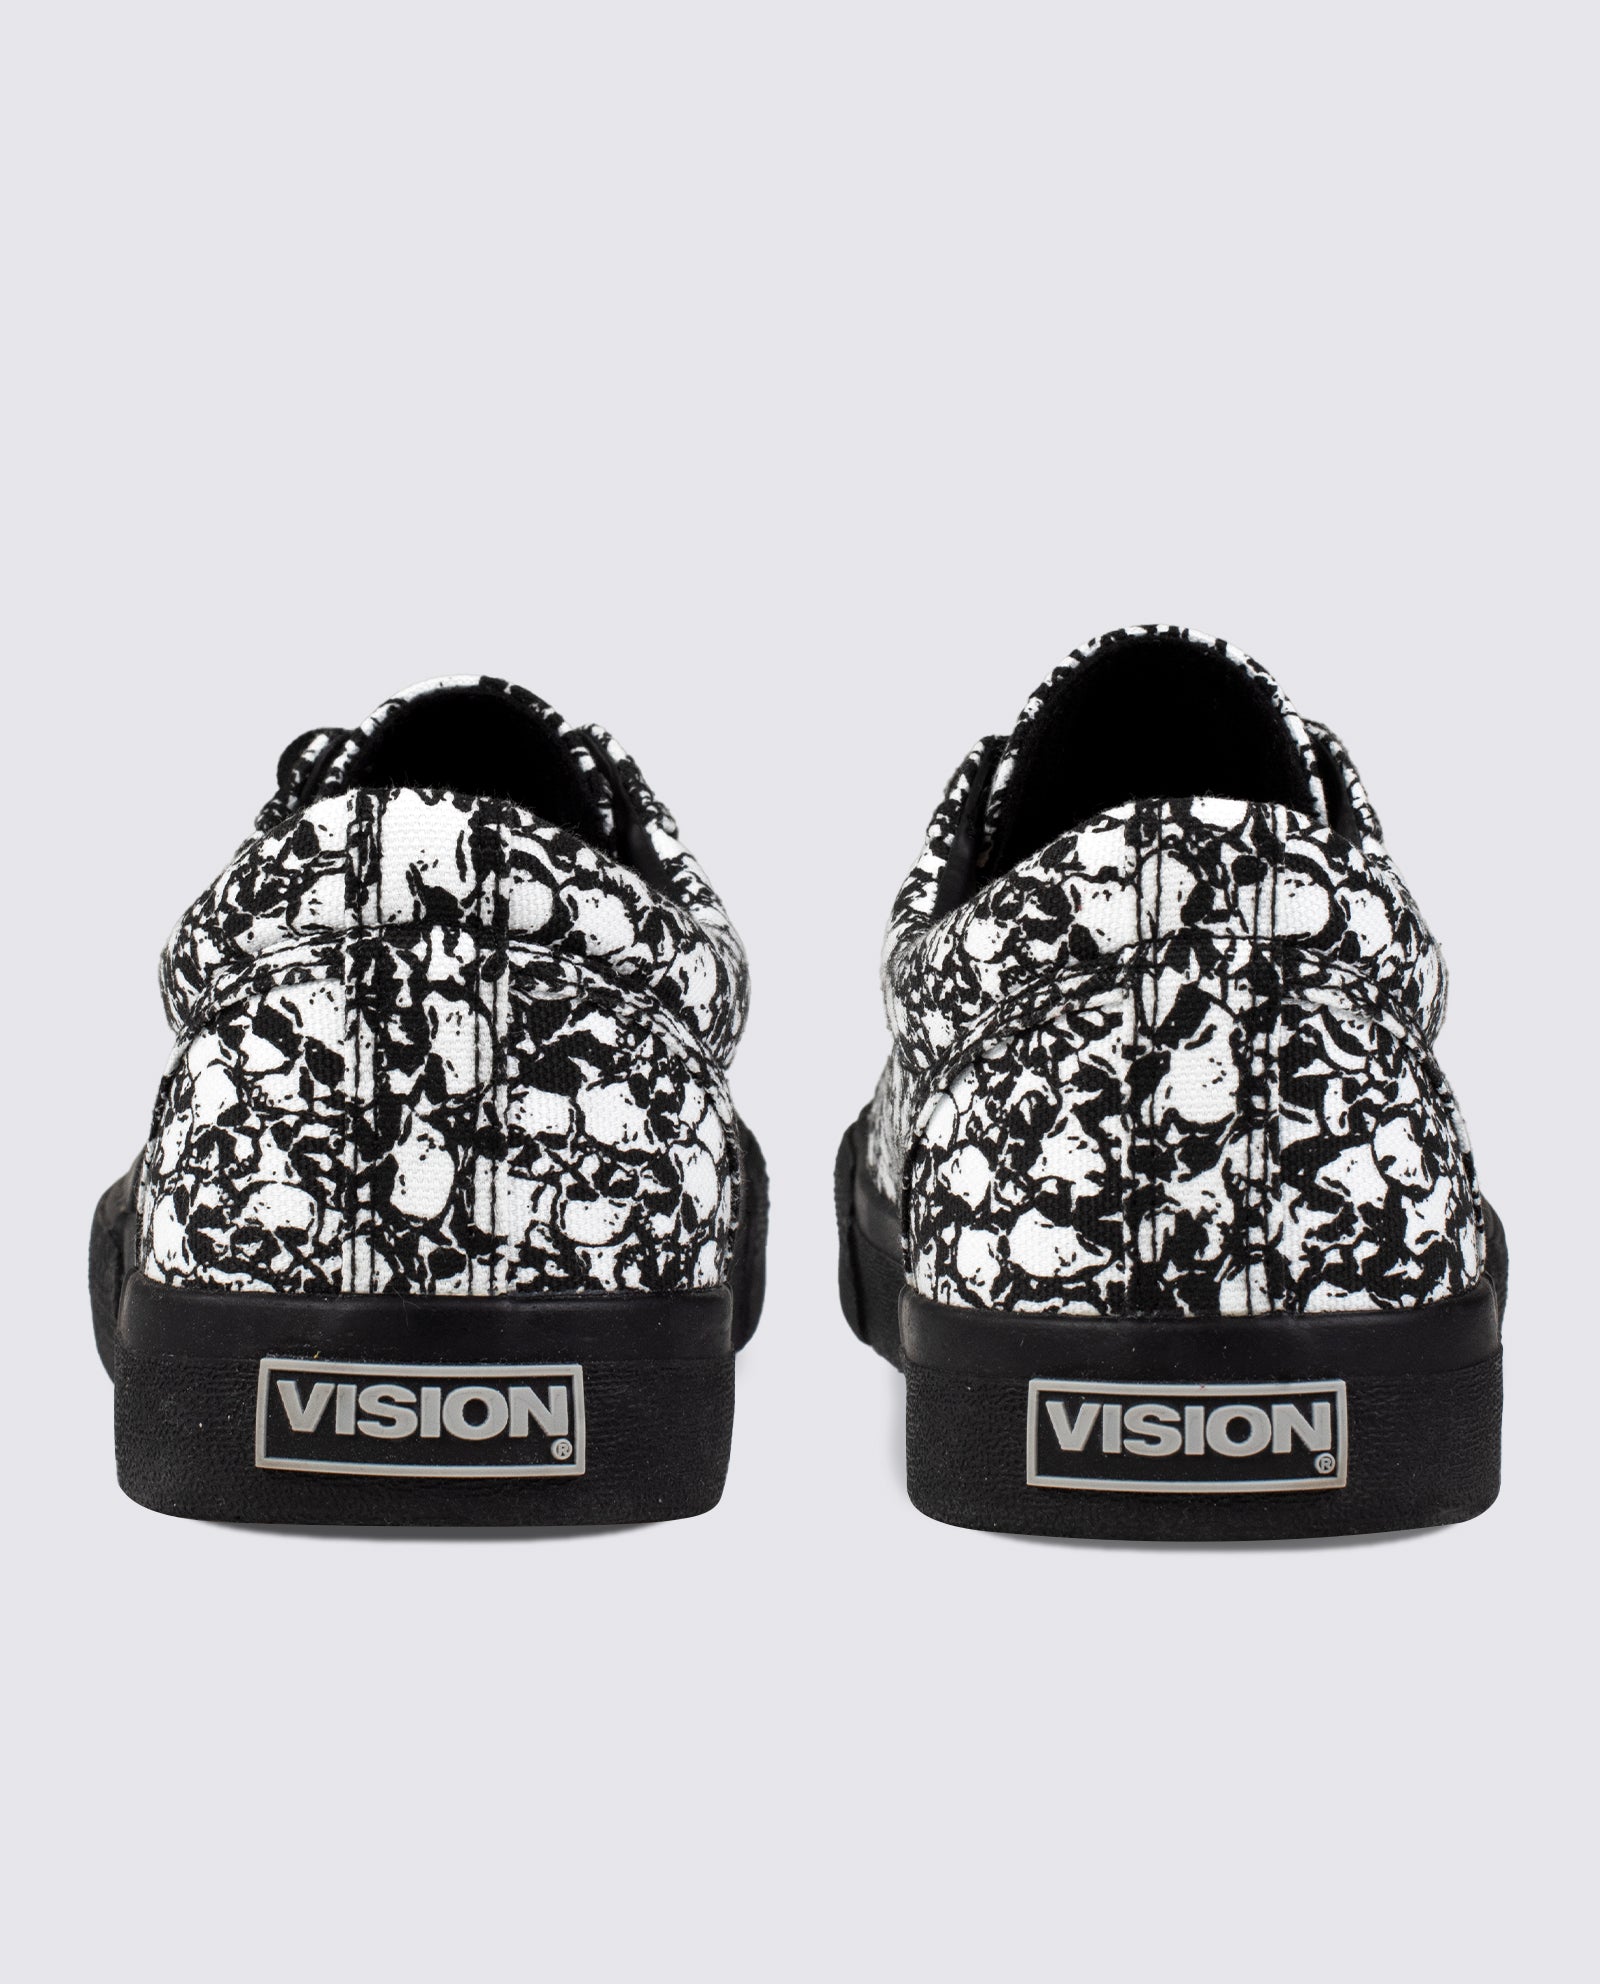 Vision Street Wear Canvas Low Top Skateboard Sneakers Skull